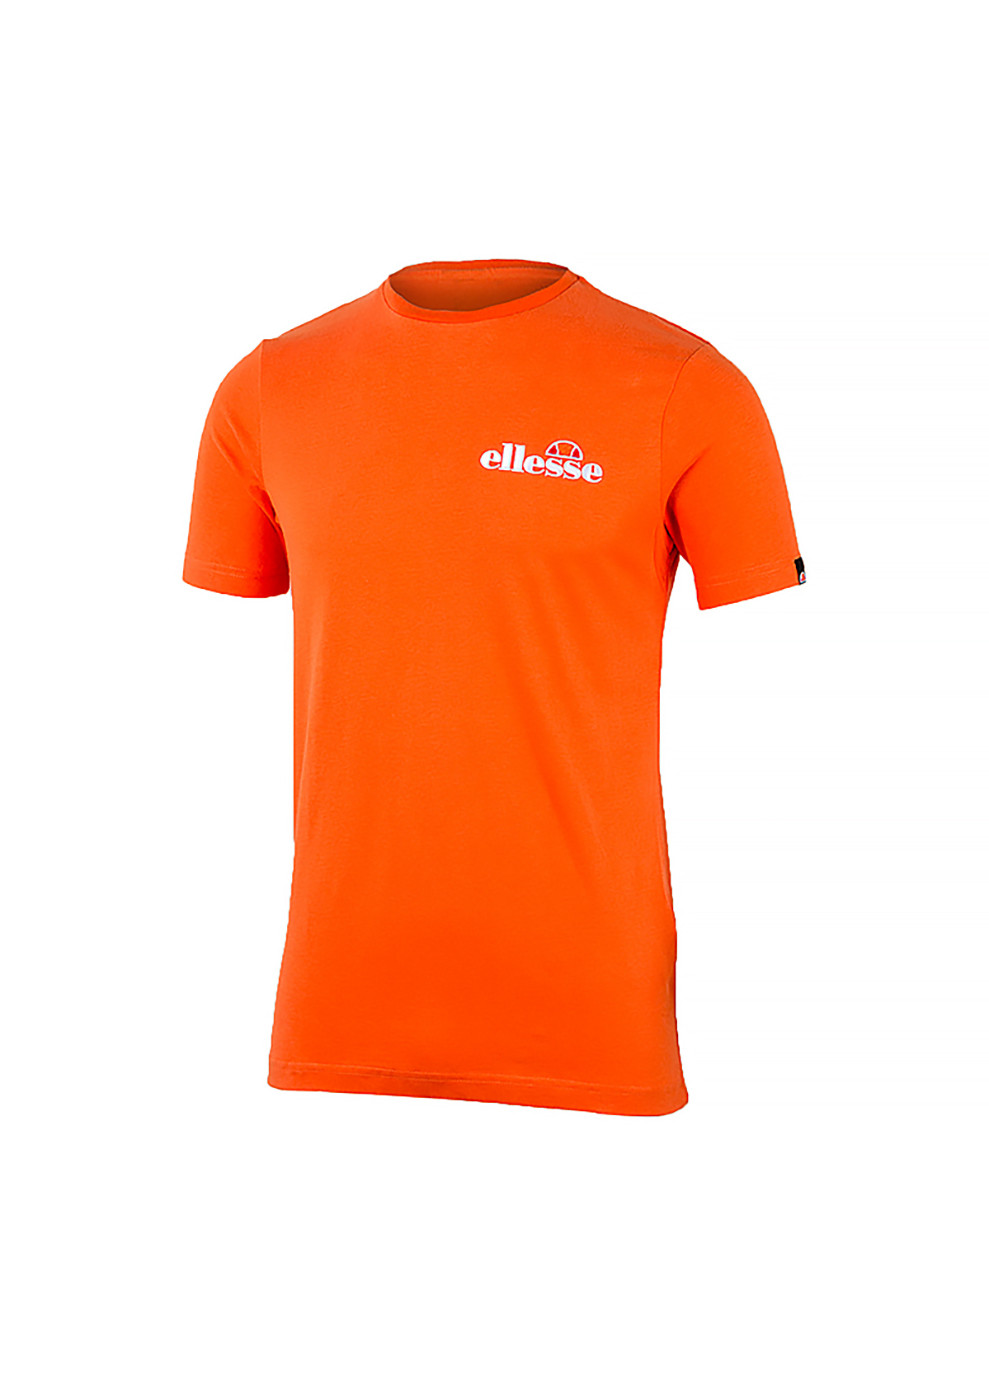 Помаранчева чоловіча футболка voodootee помаранчевий xl (shk06835-orange xl) Ellesse